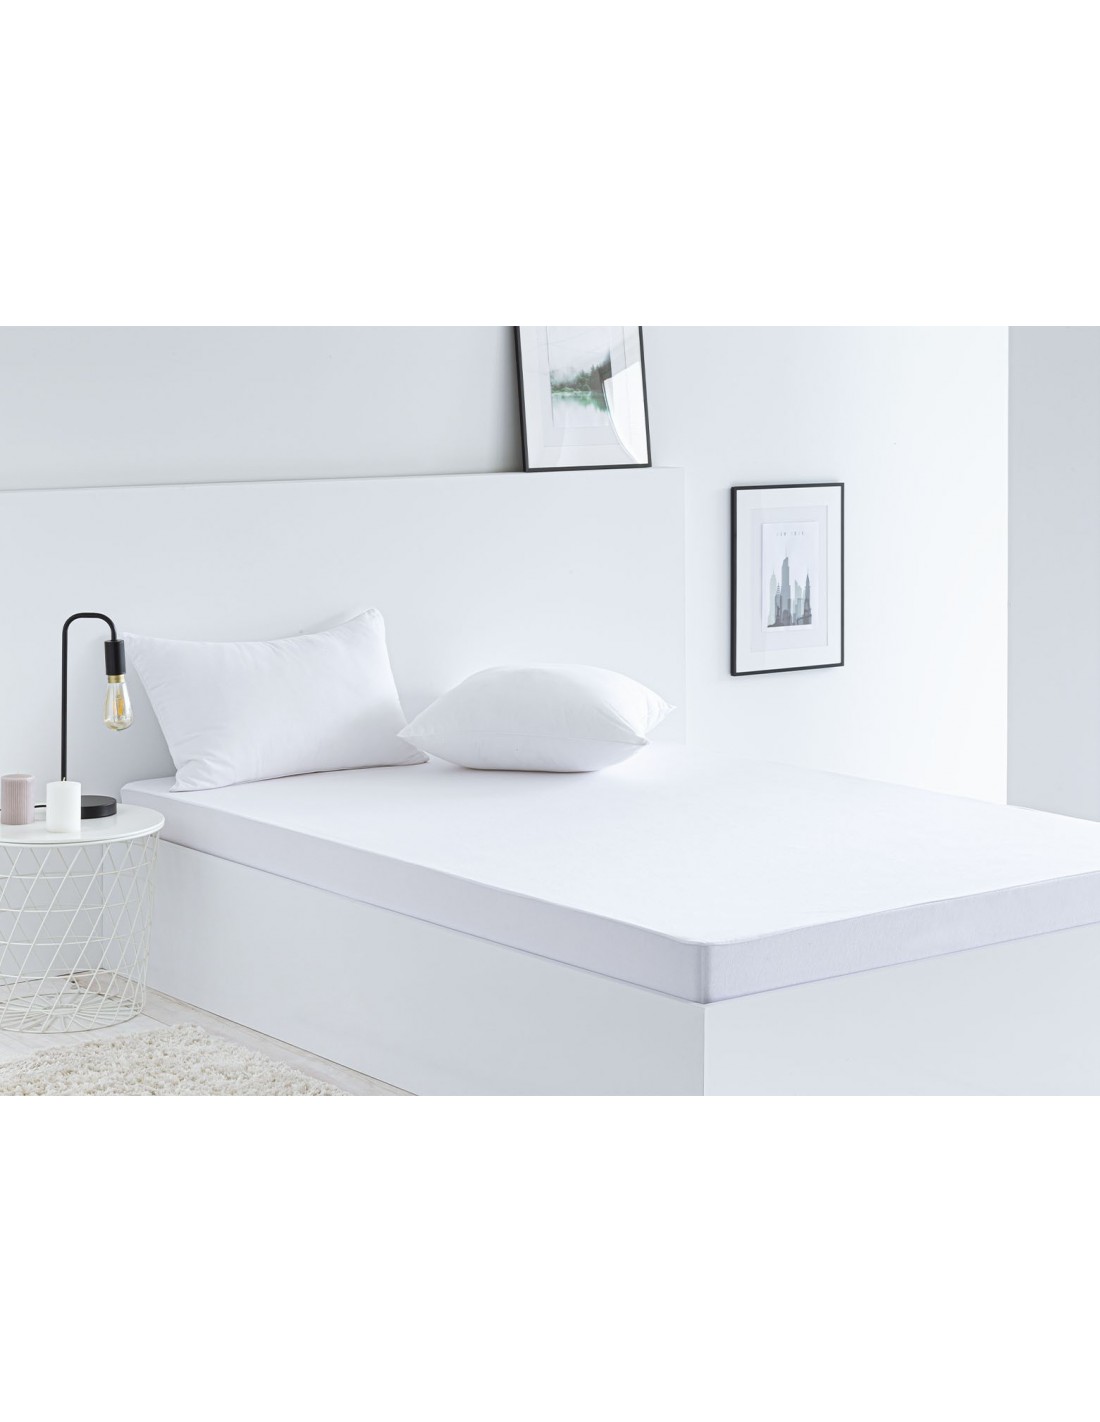 Protector de colchón Naturals Blanco Cama de 135 (135 x 190/200 cm)